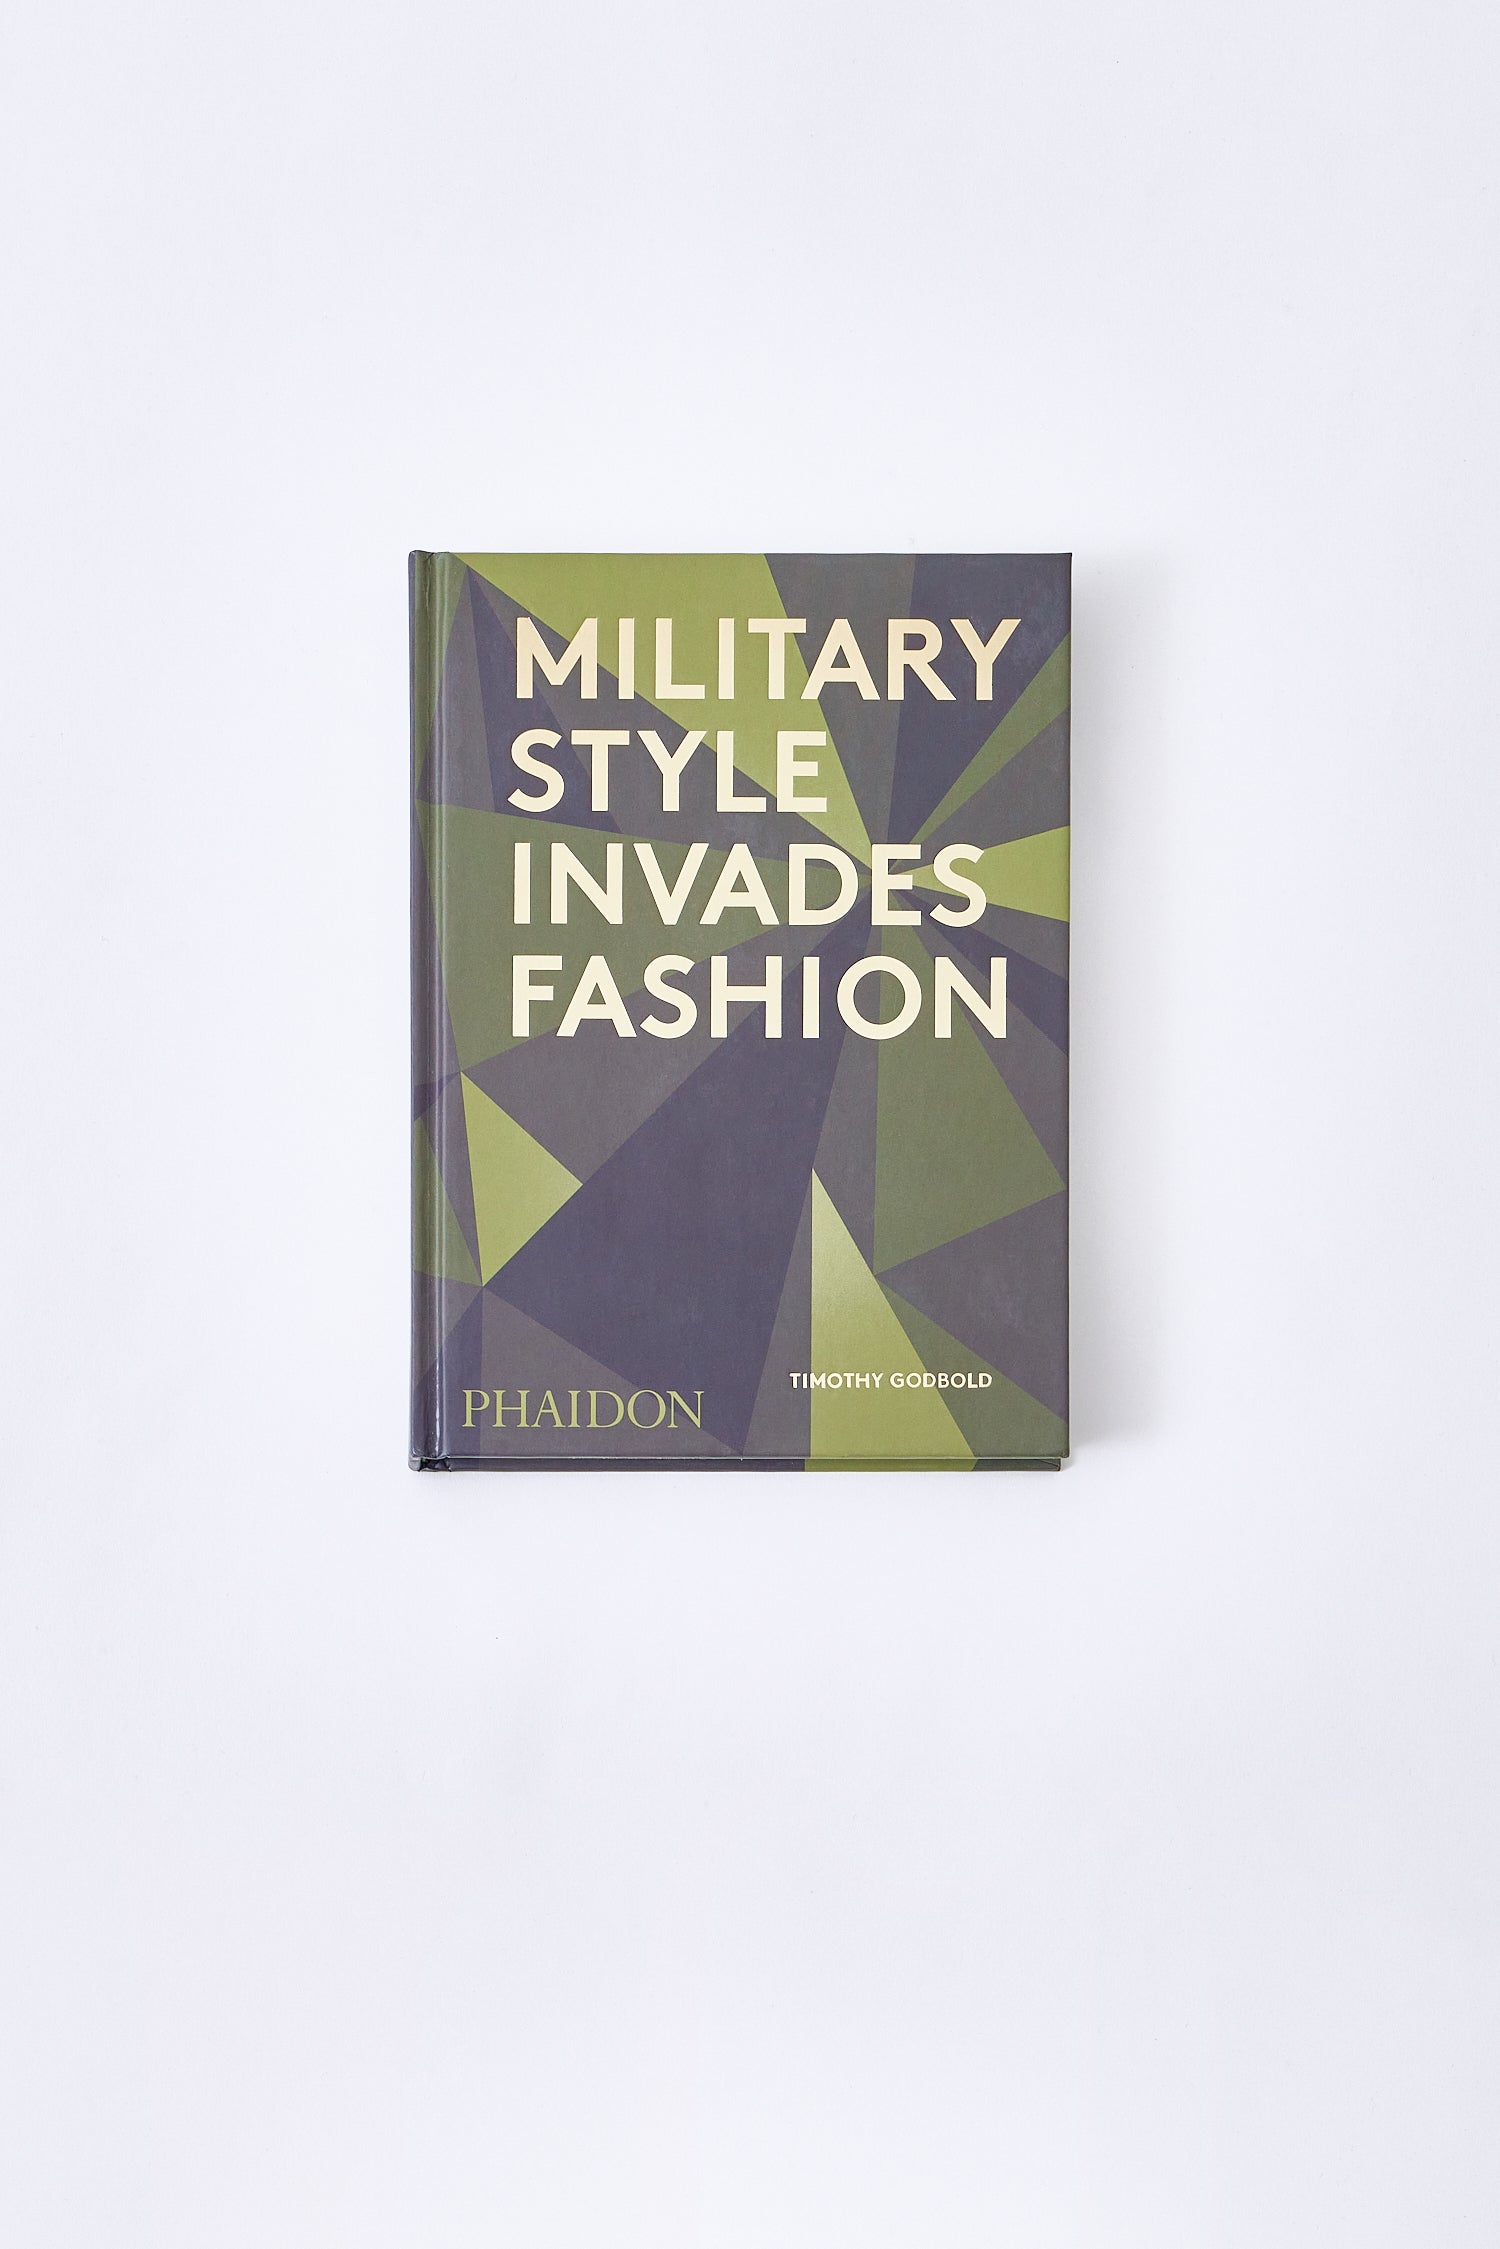 Military Style Invades Fashion - Timothy Godbold